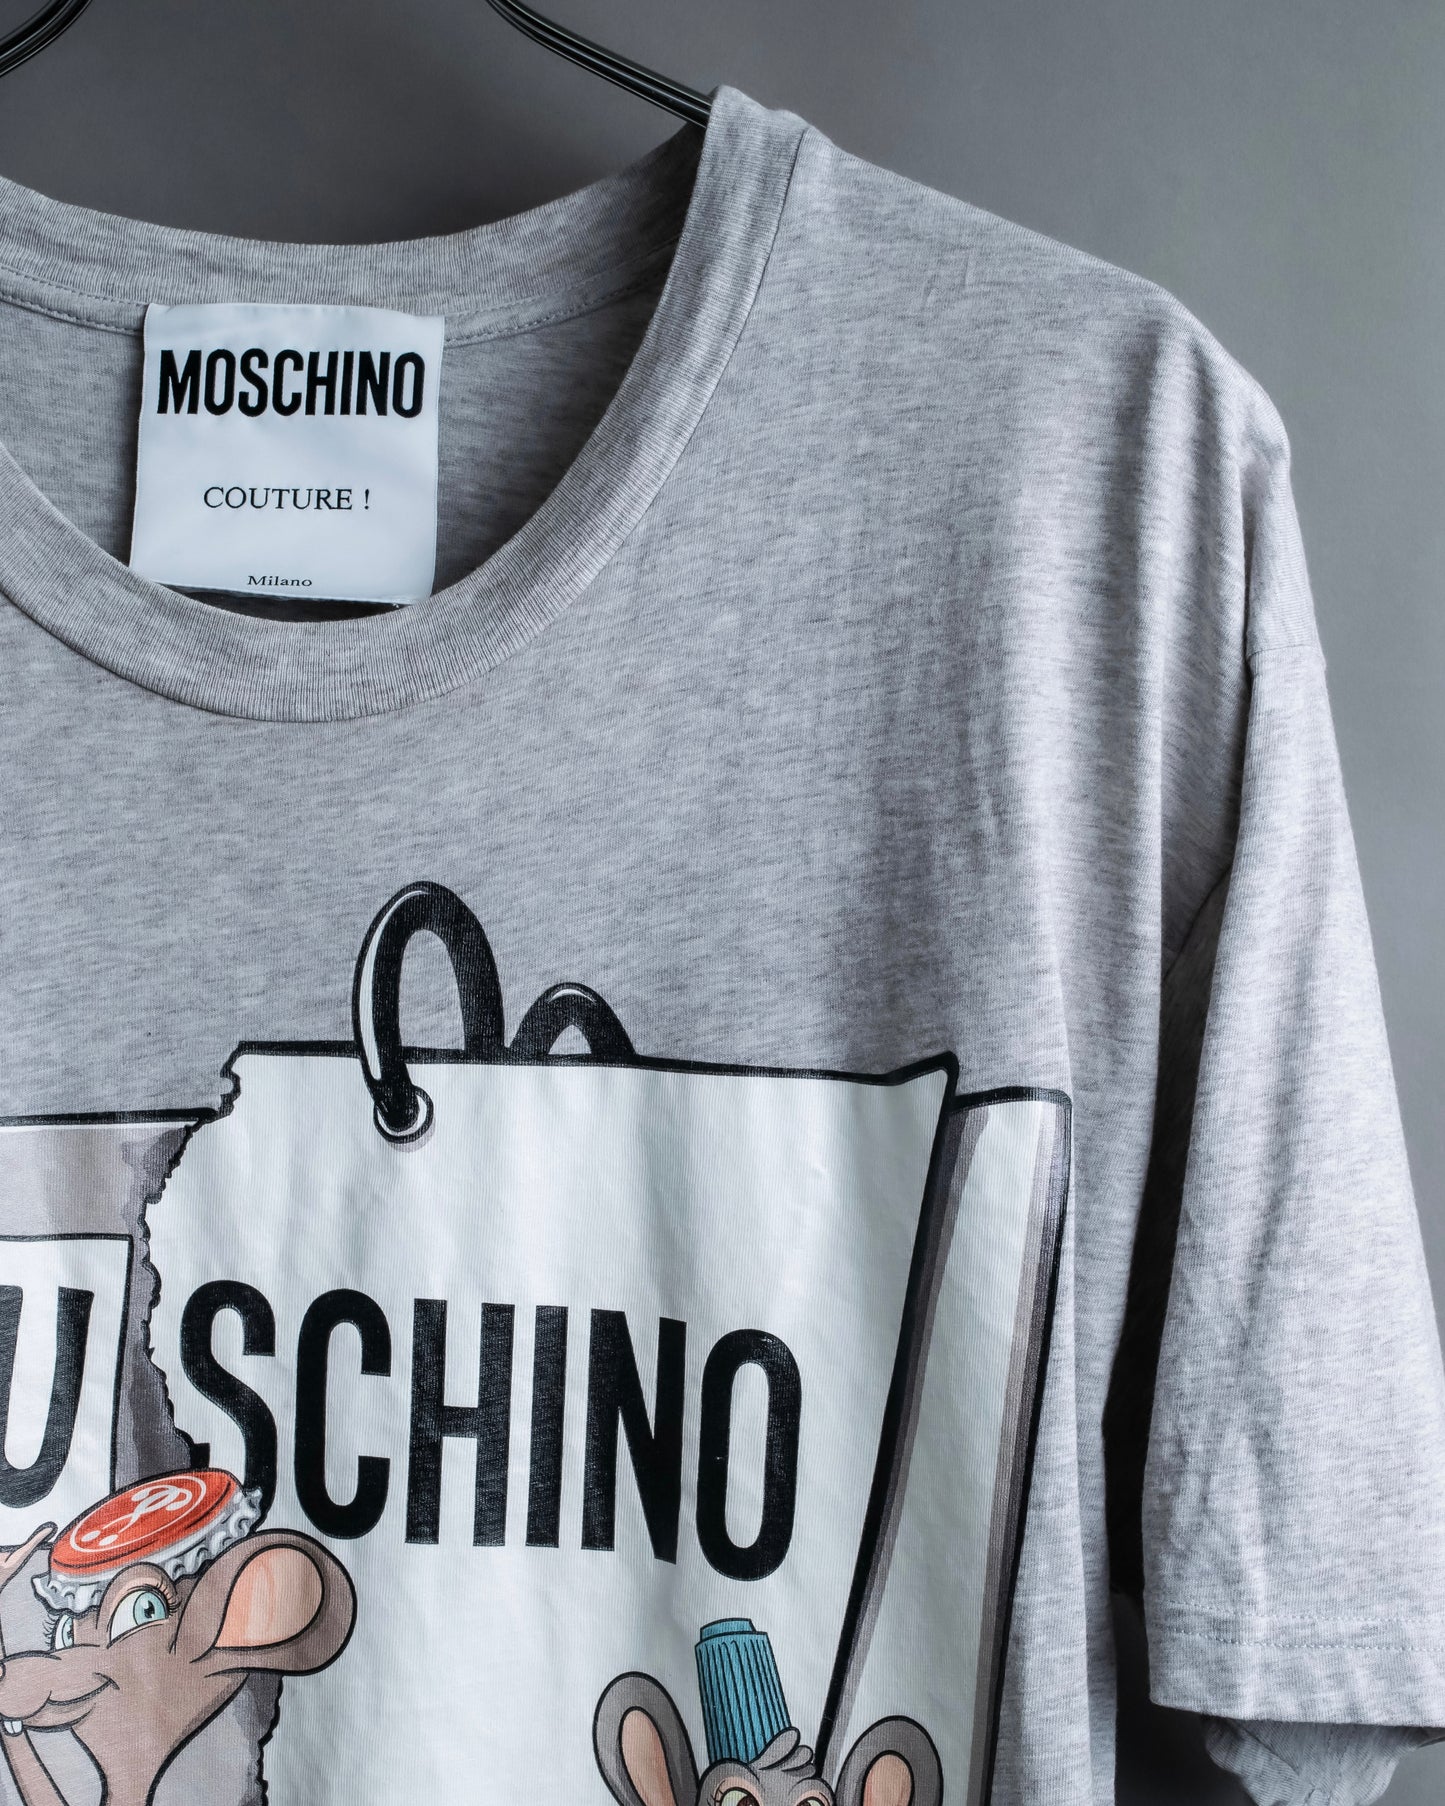 "MOSCHINO COUTURE" Unique mouse dress-up design T-shirt